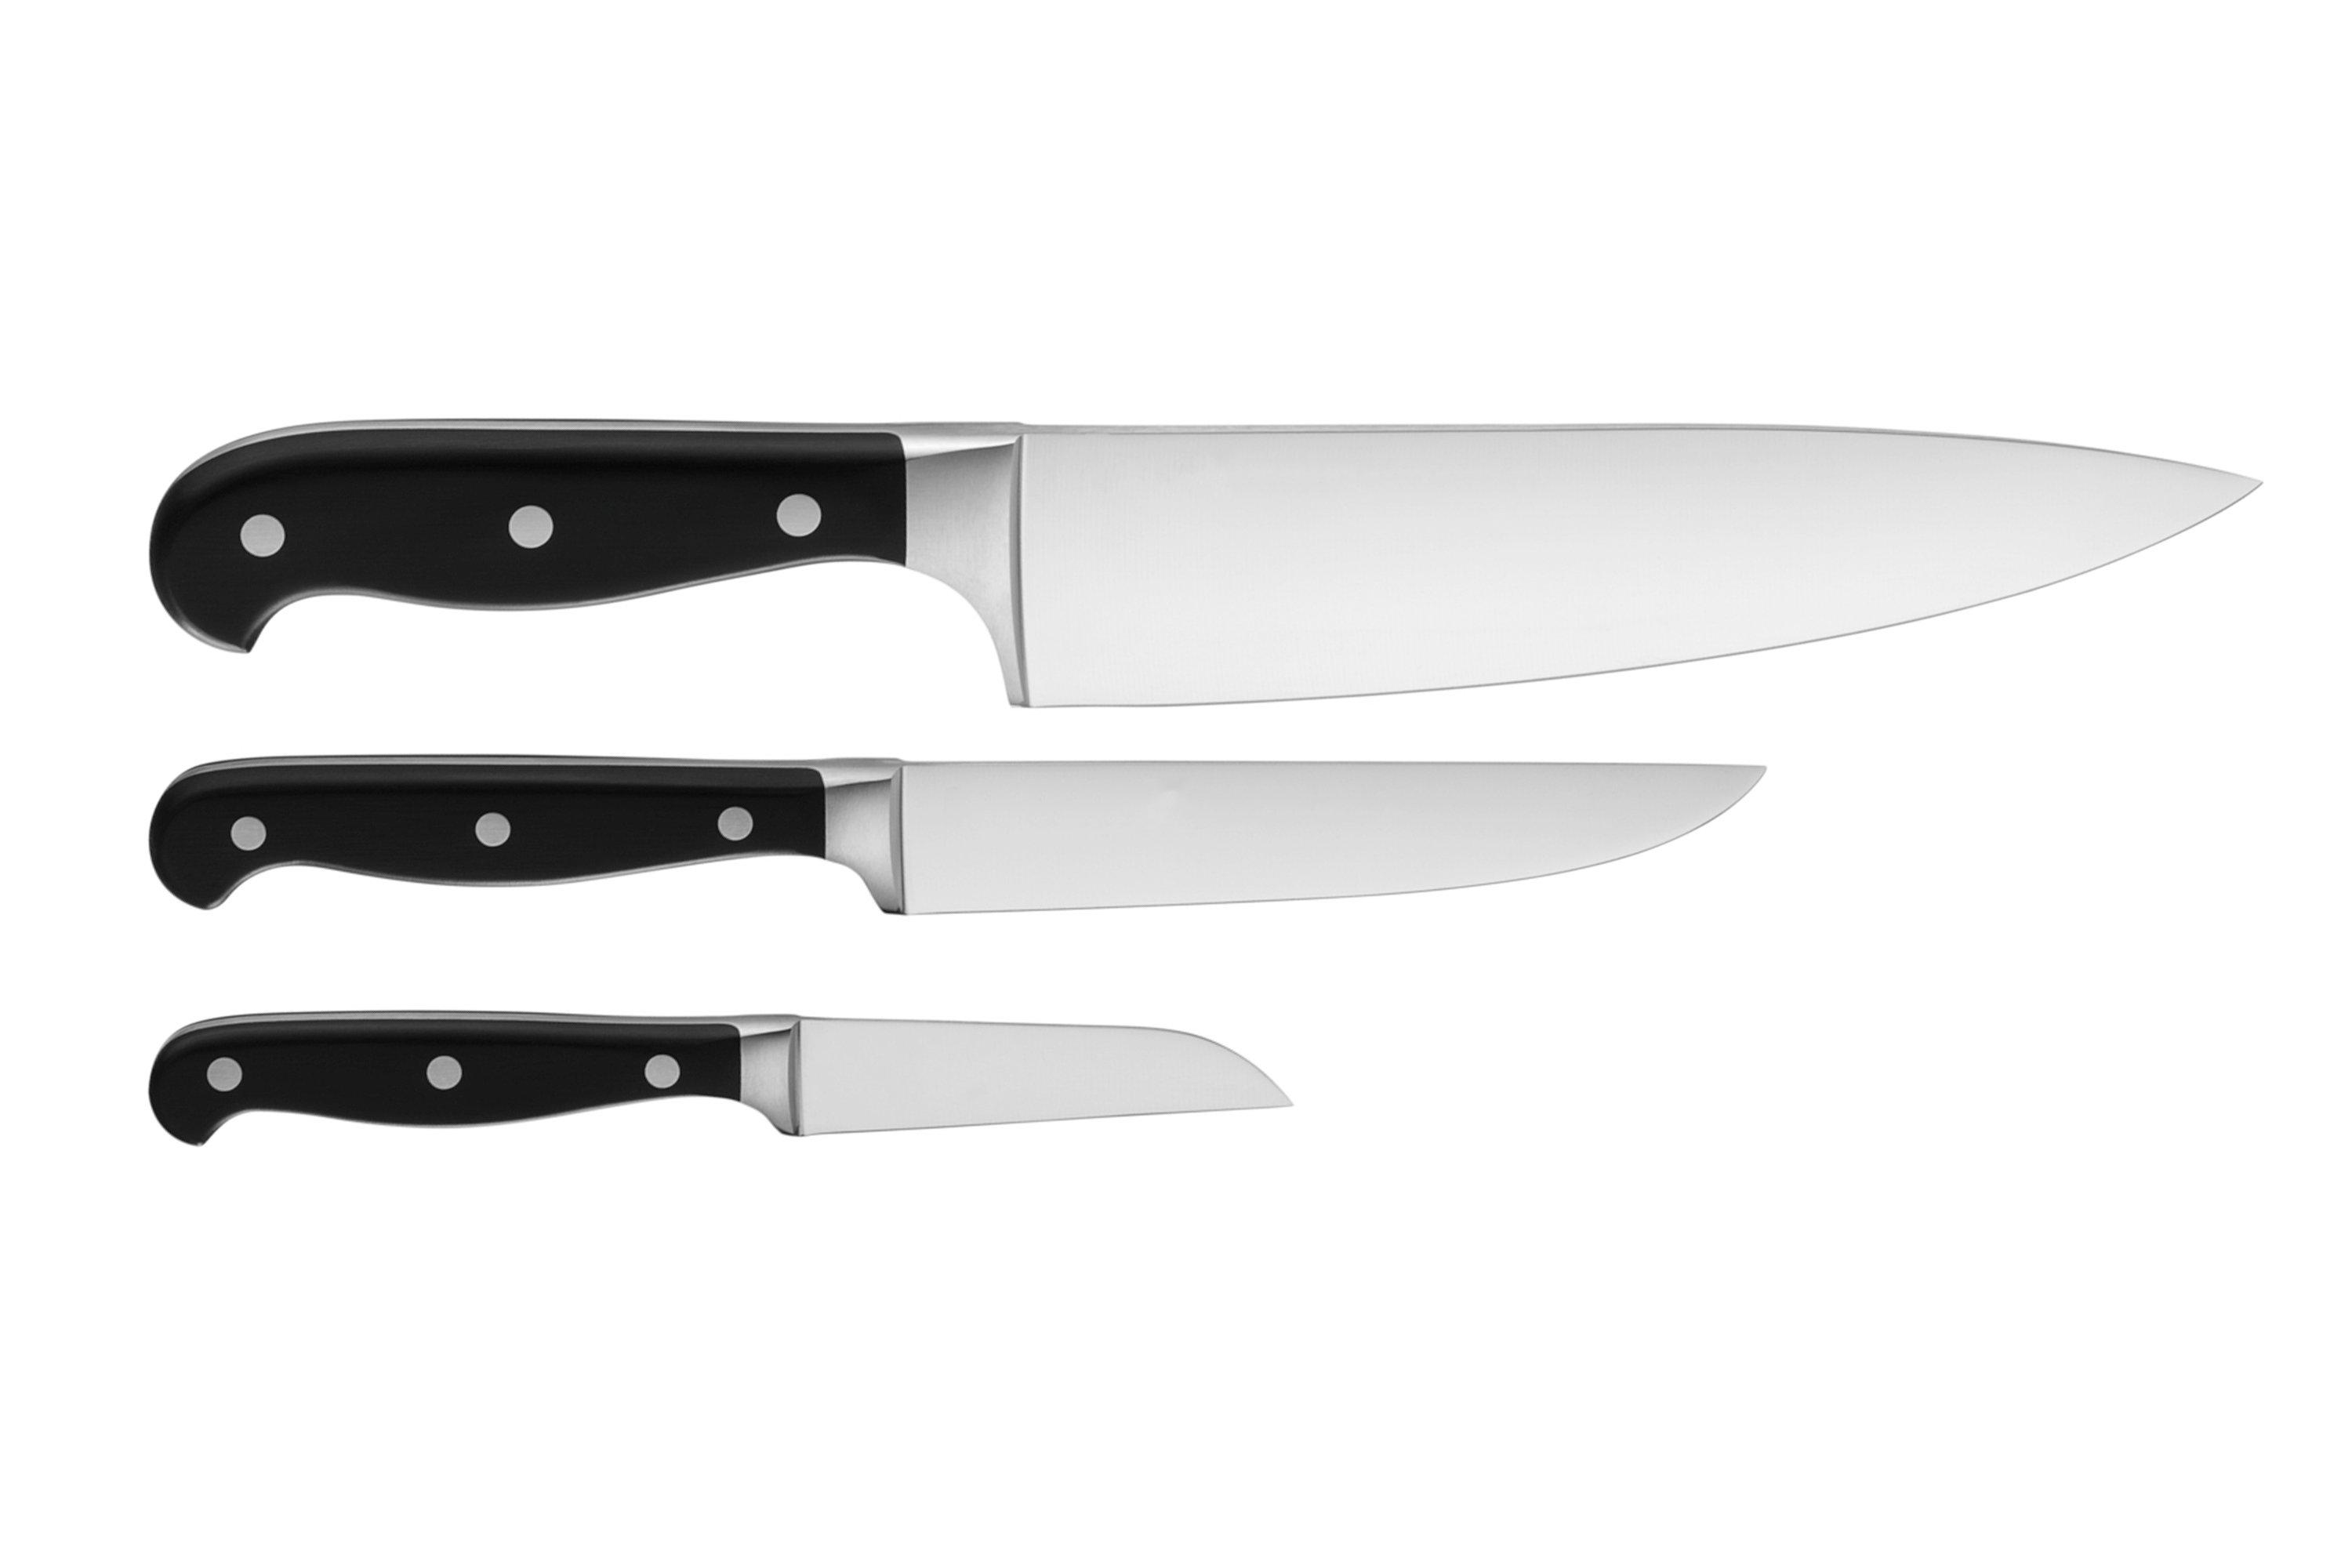 WMF Spitzenklasse Plus 1894919992, 3-piece knife set | Advantageously  shopping at